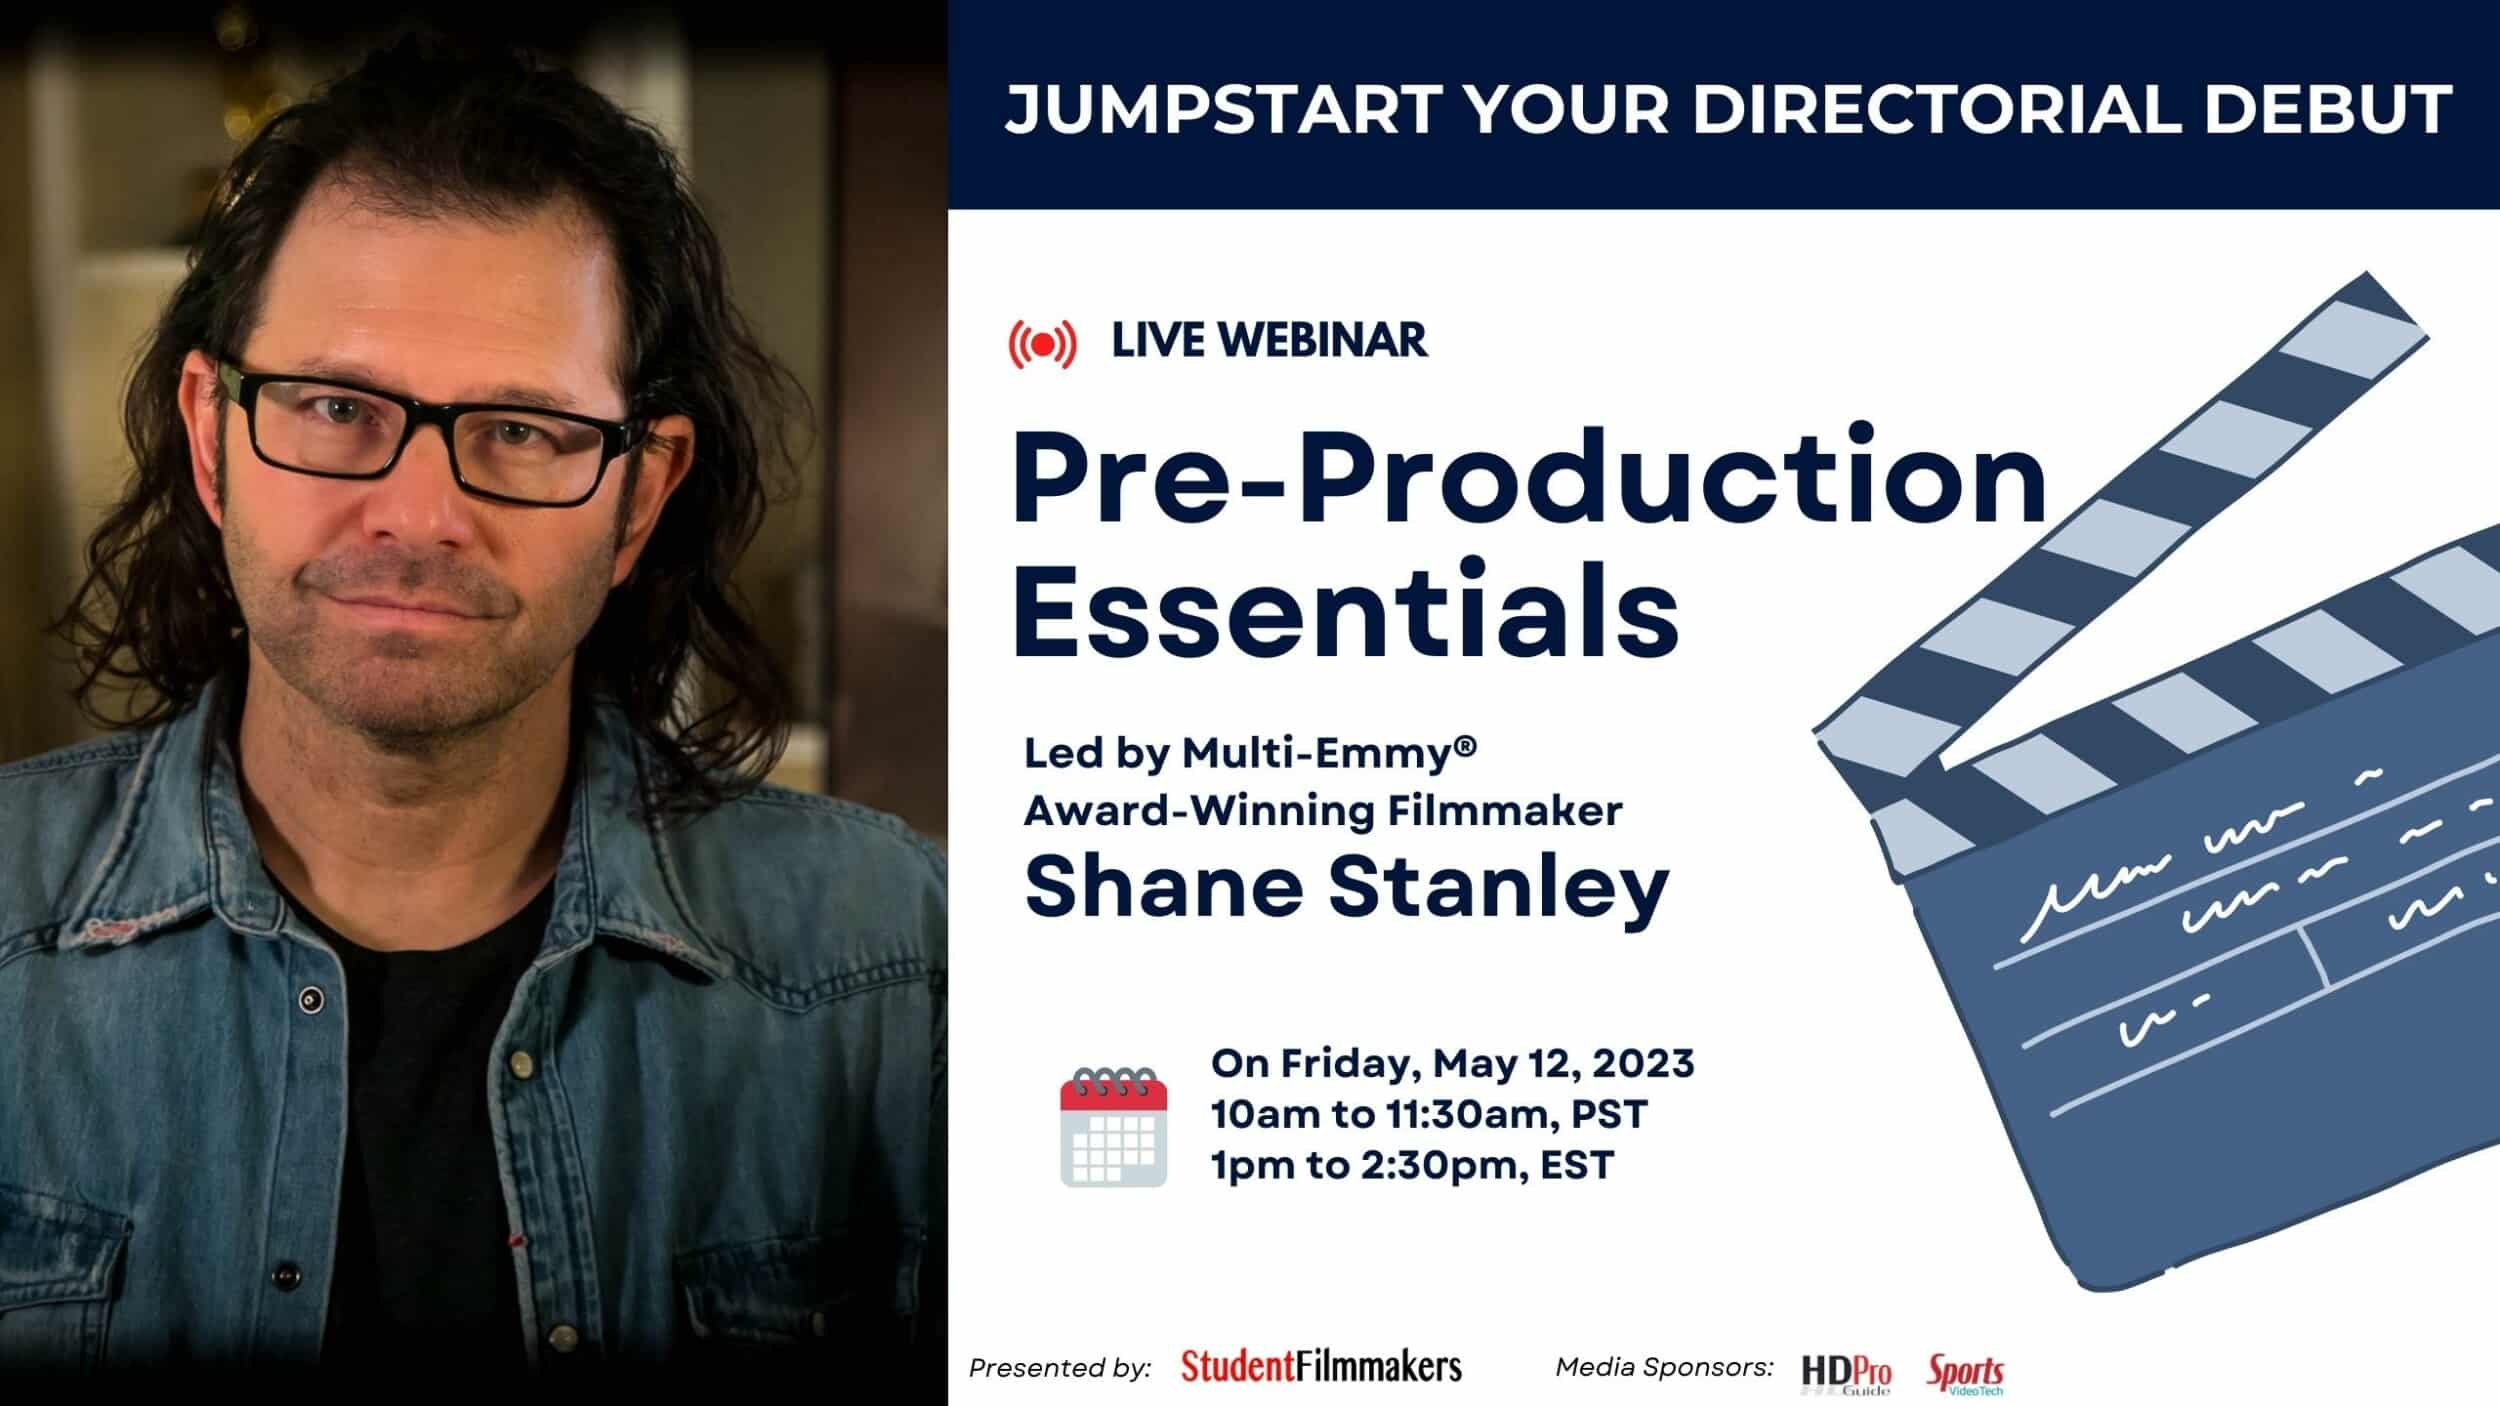 With Multi- Emmy Award Winning Filmmaker, Shane Stanley - Jumpstart Your Directorial Debut: "Pre-Production Essentials"